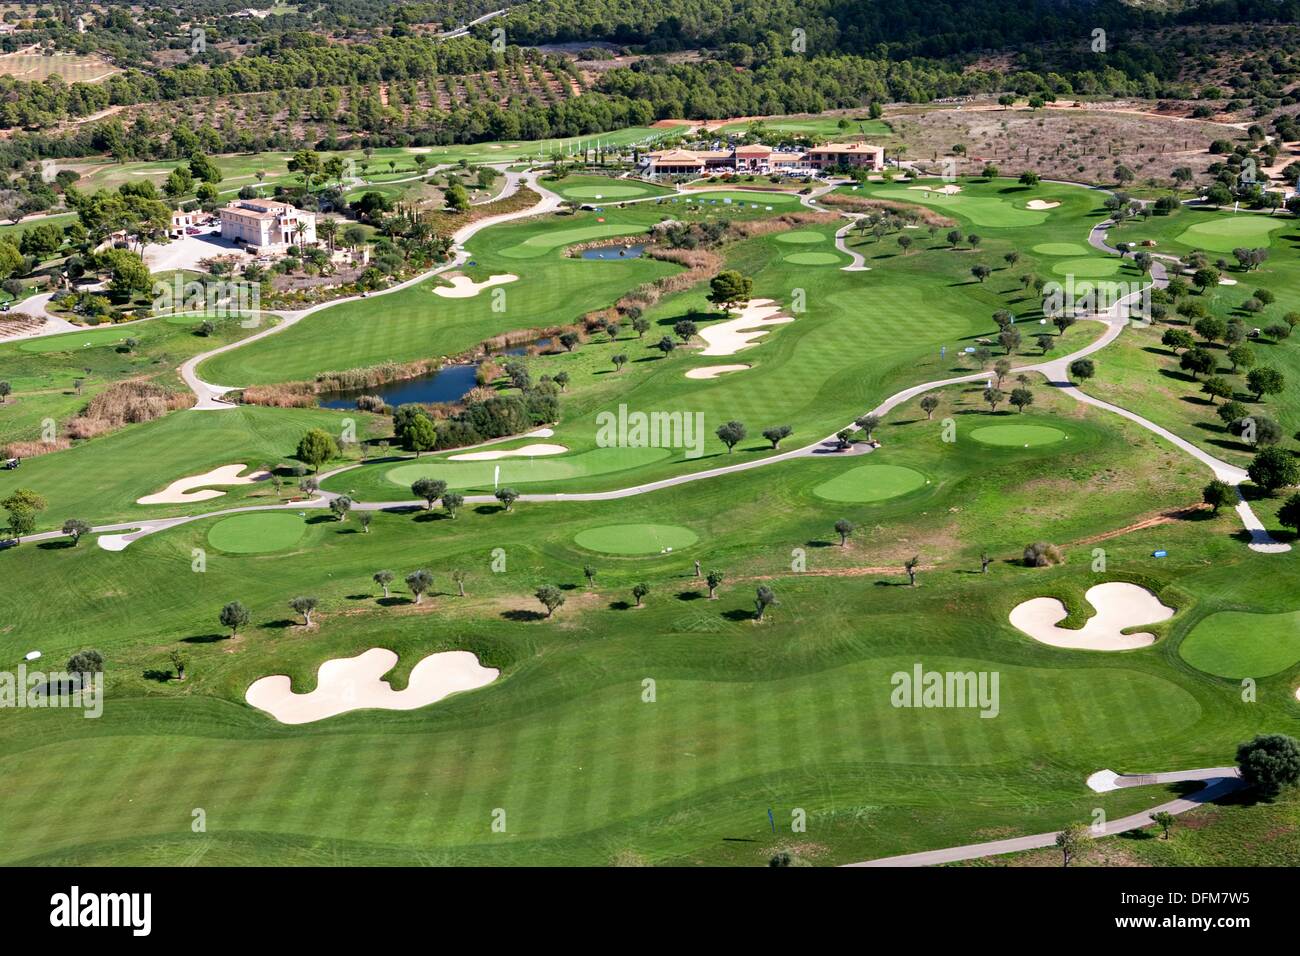 Son Gual Golf Course in Mallorca Spain Stock Photo - Alamy